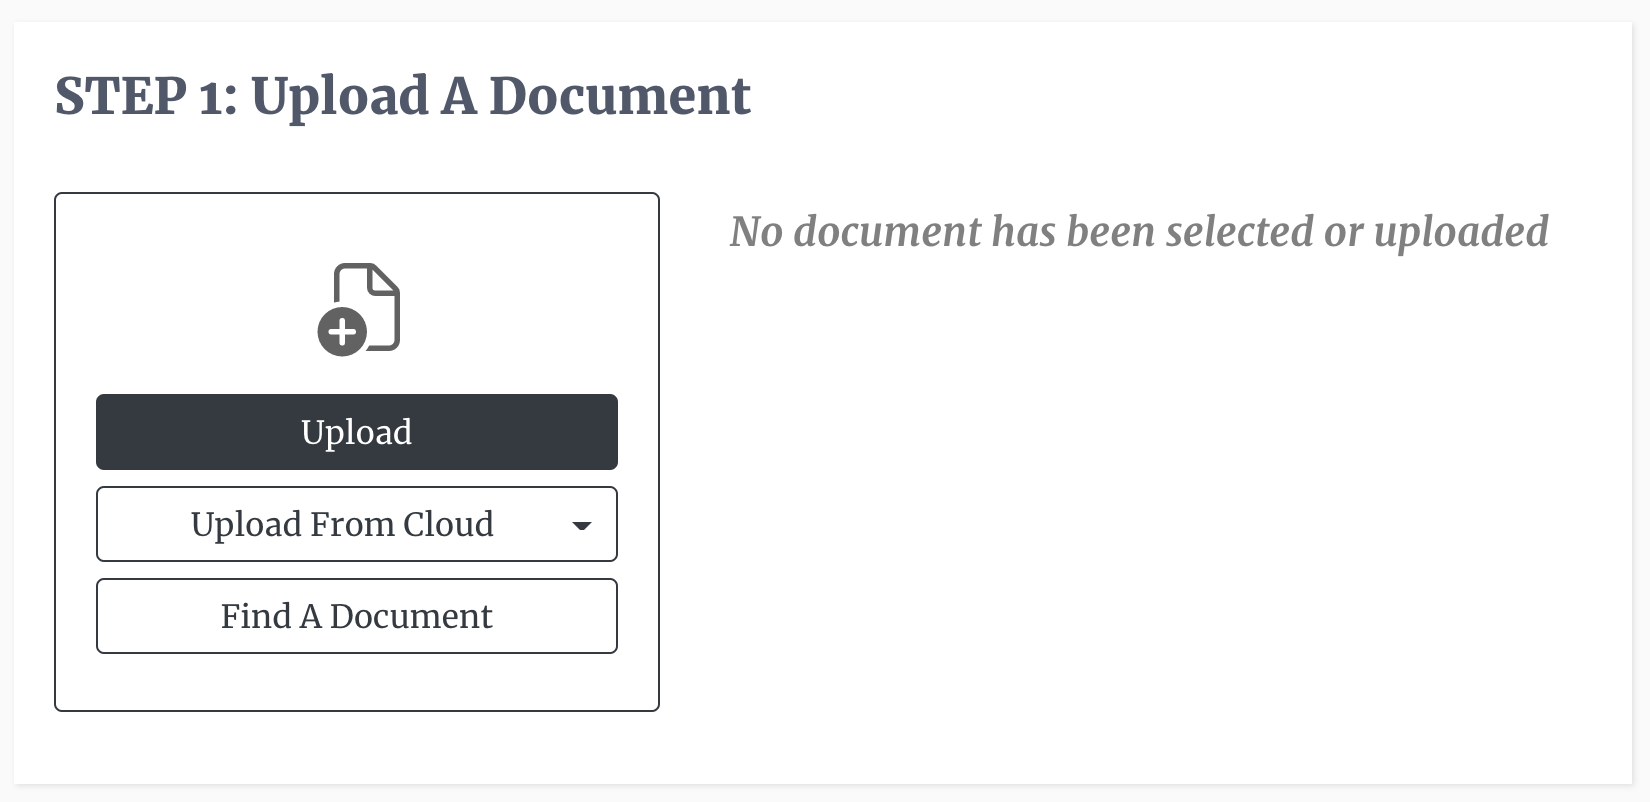 Upload Documents